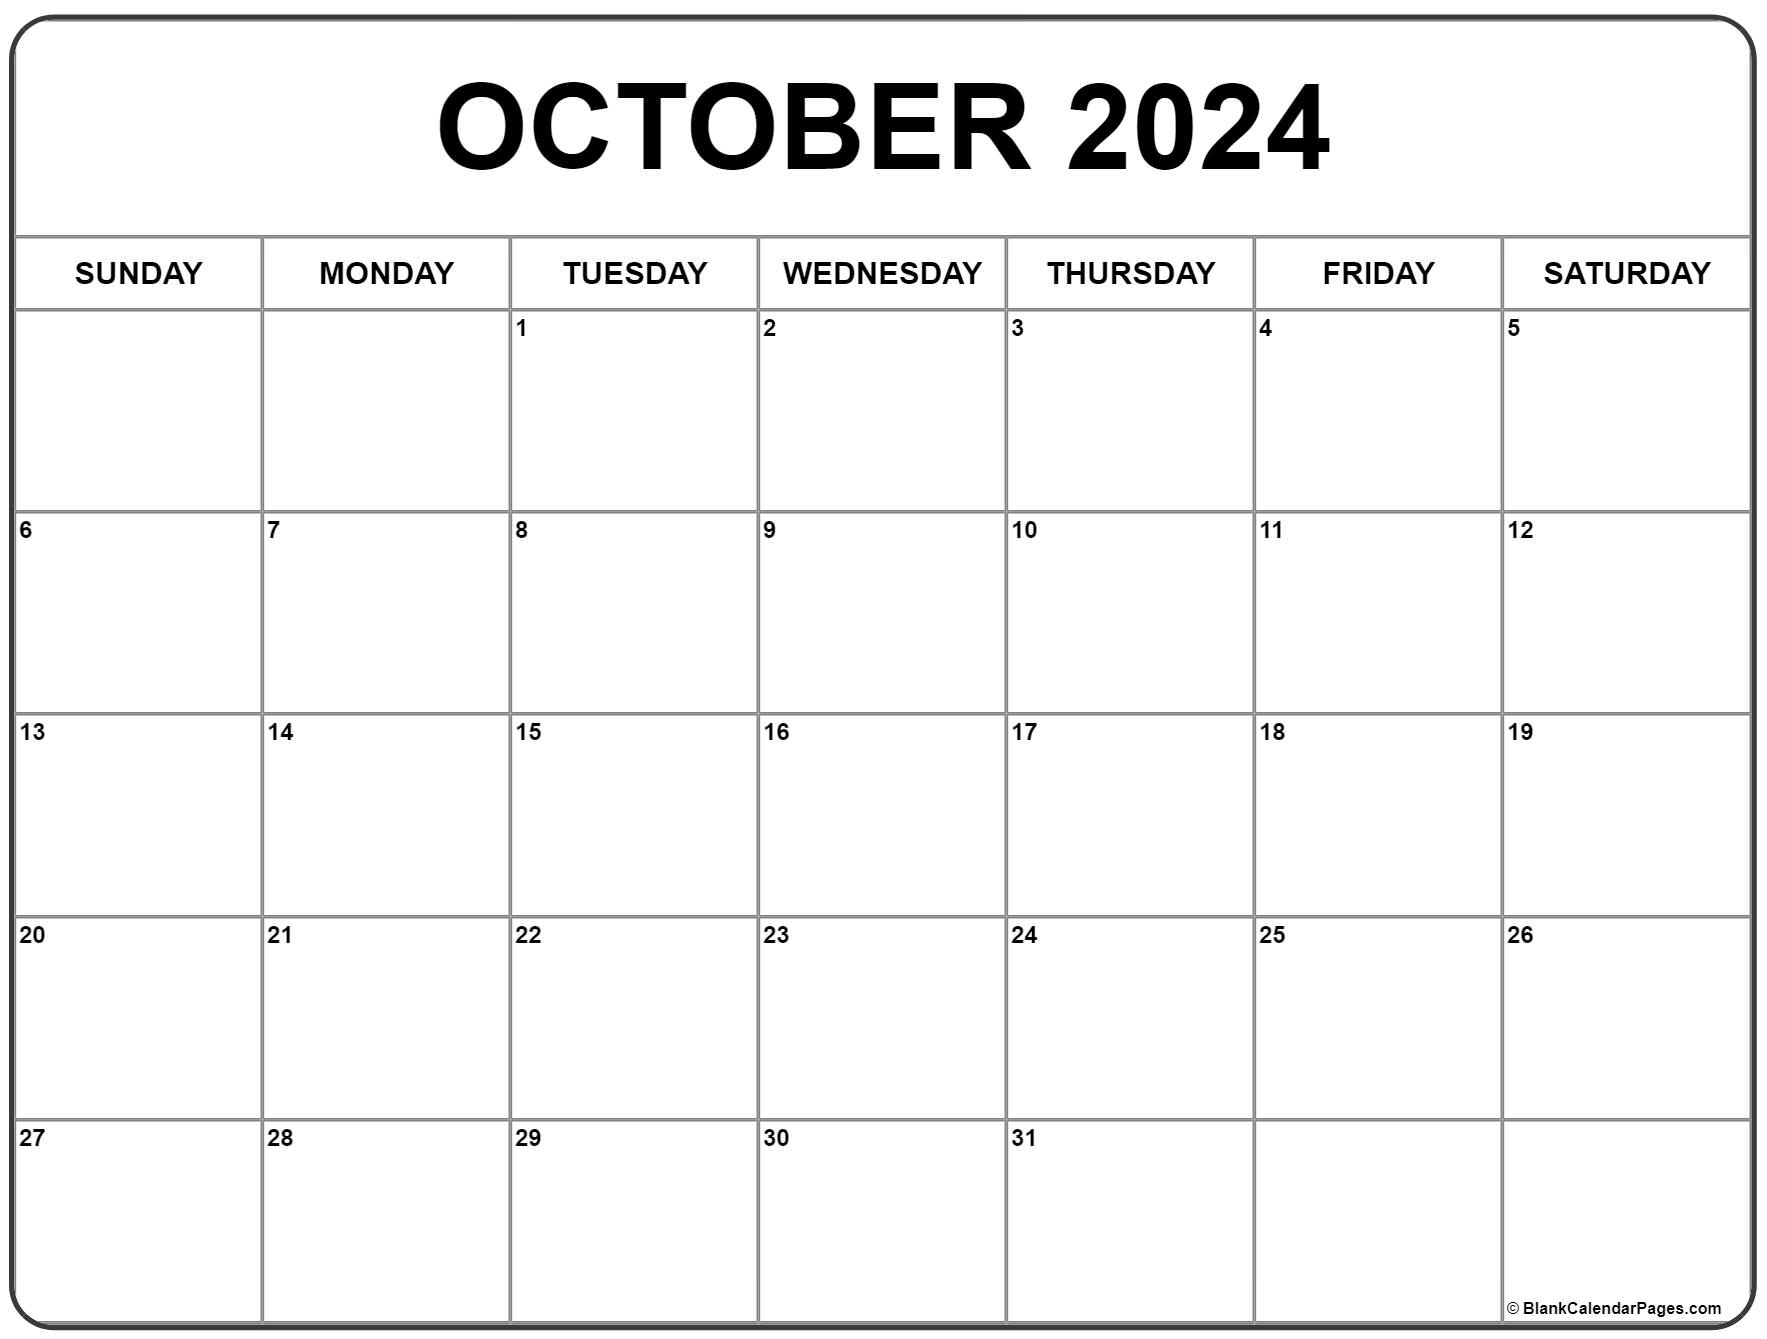 October 2024 Calendar | Free Printable Calendar for Printable Calendar 2024 October